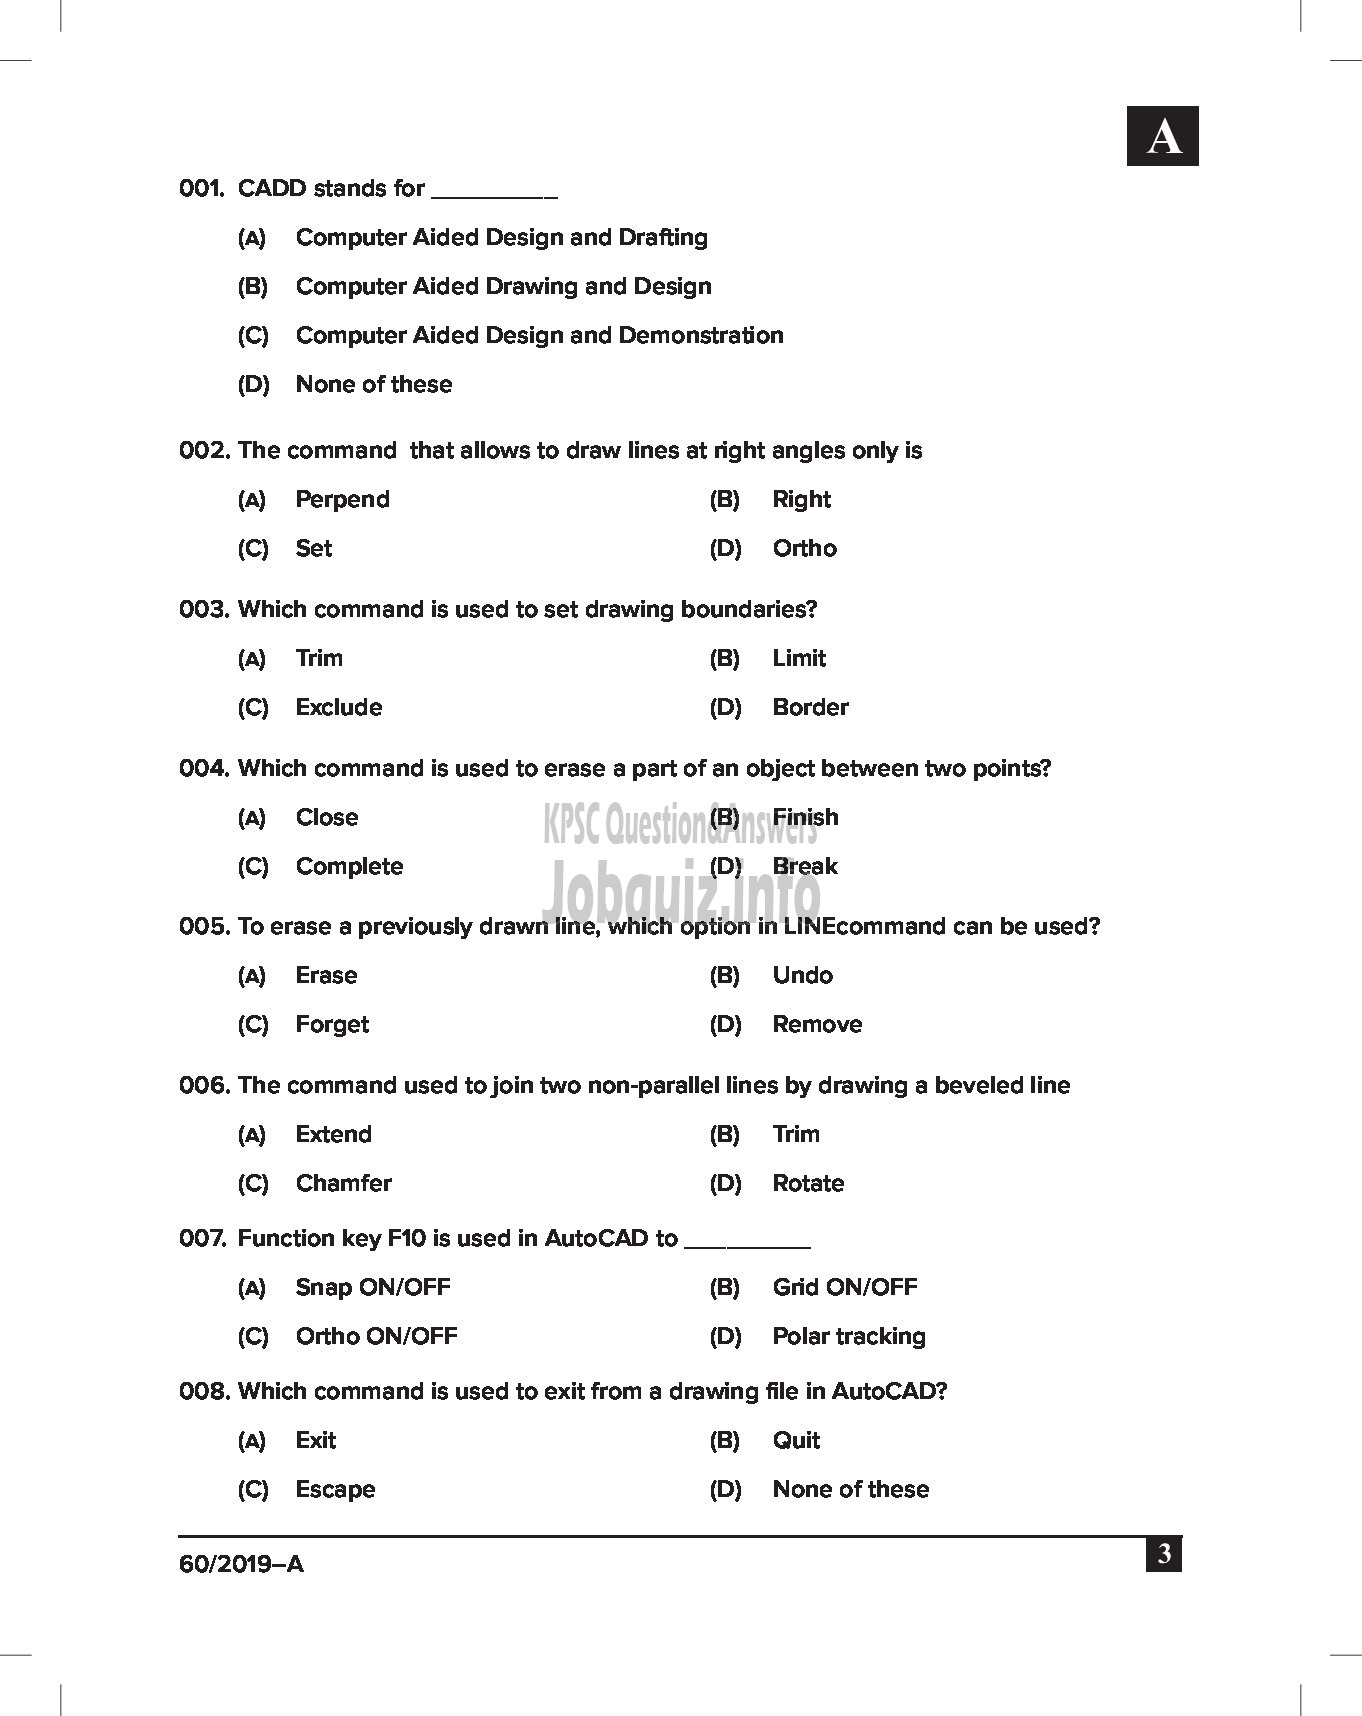 Kerala PSC Question Paper - DRAFTSMAN GR III CIVIL English -3